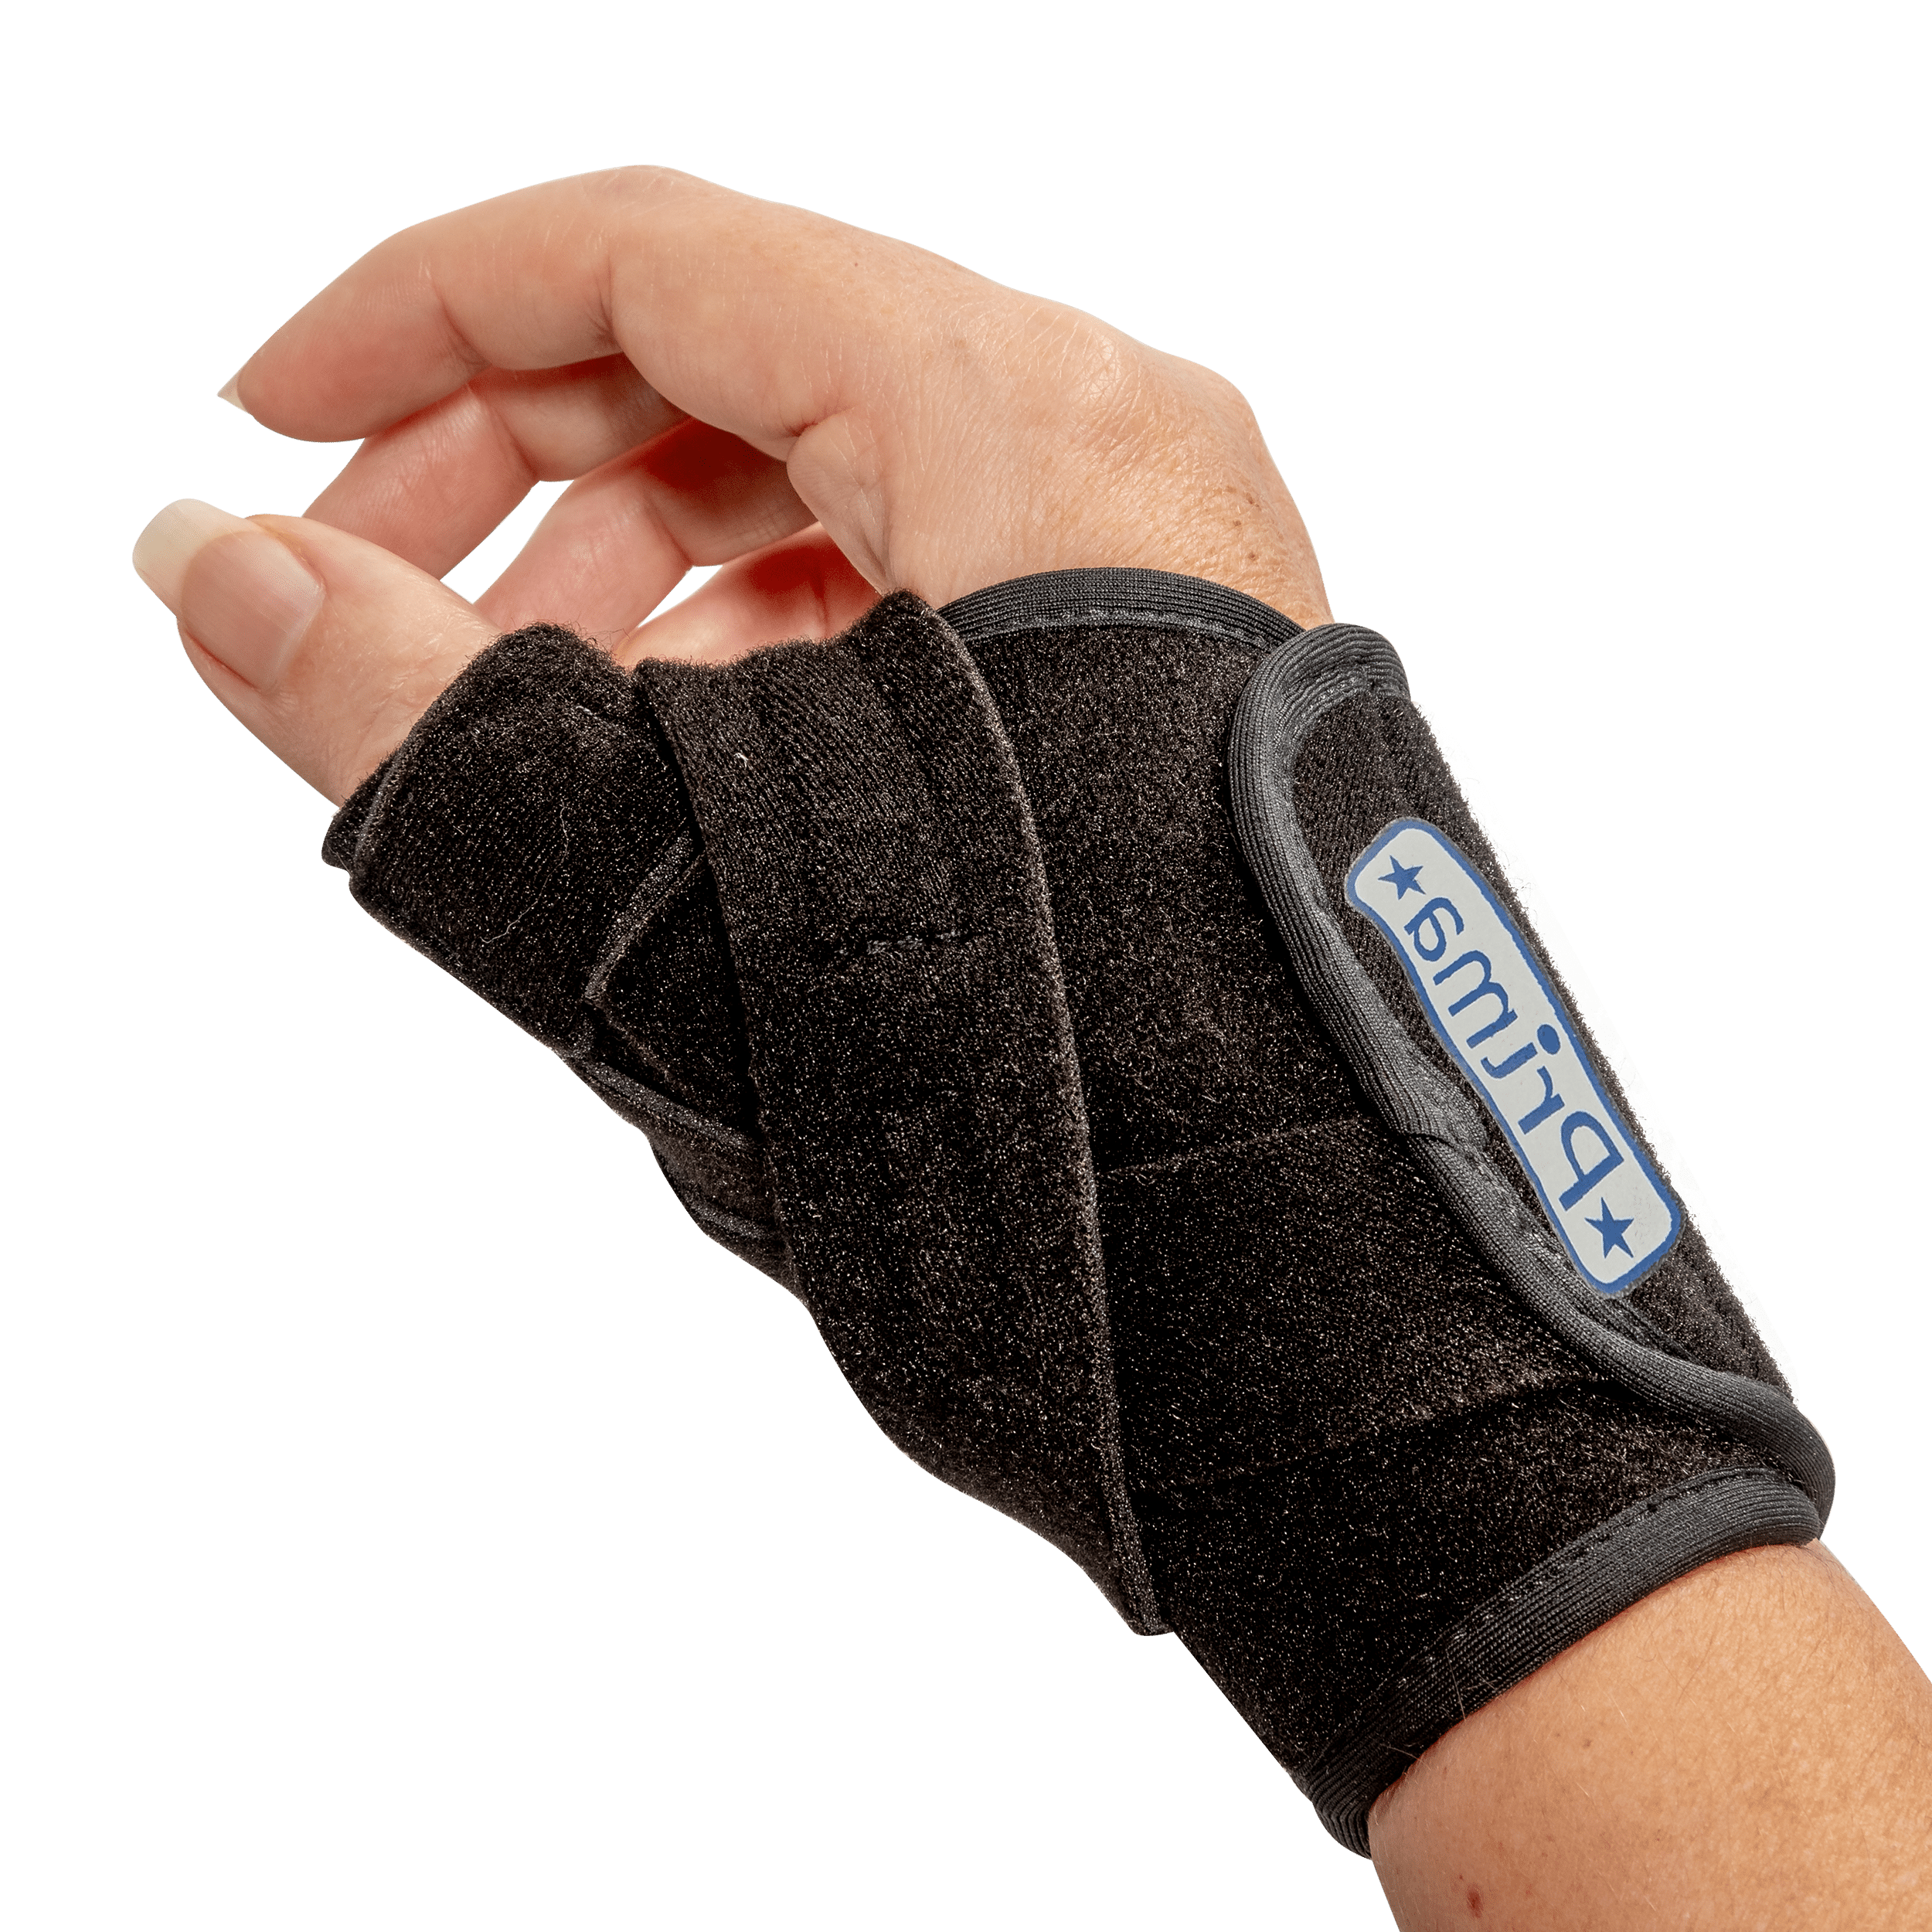 3pp prima thumb brace for thumb arthritis